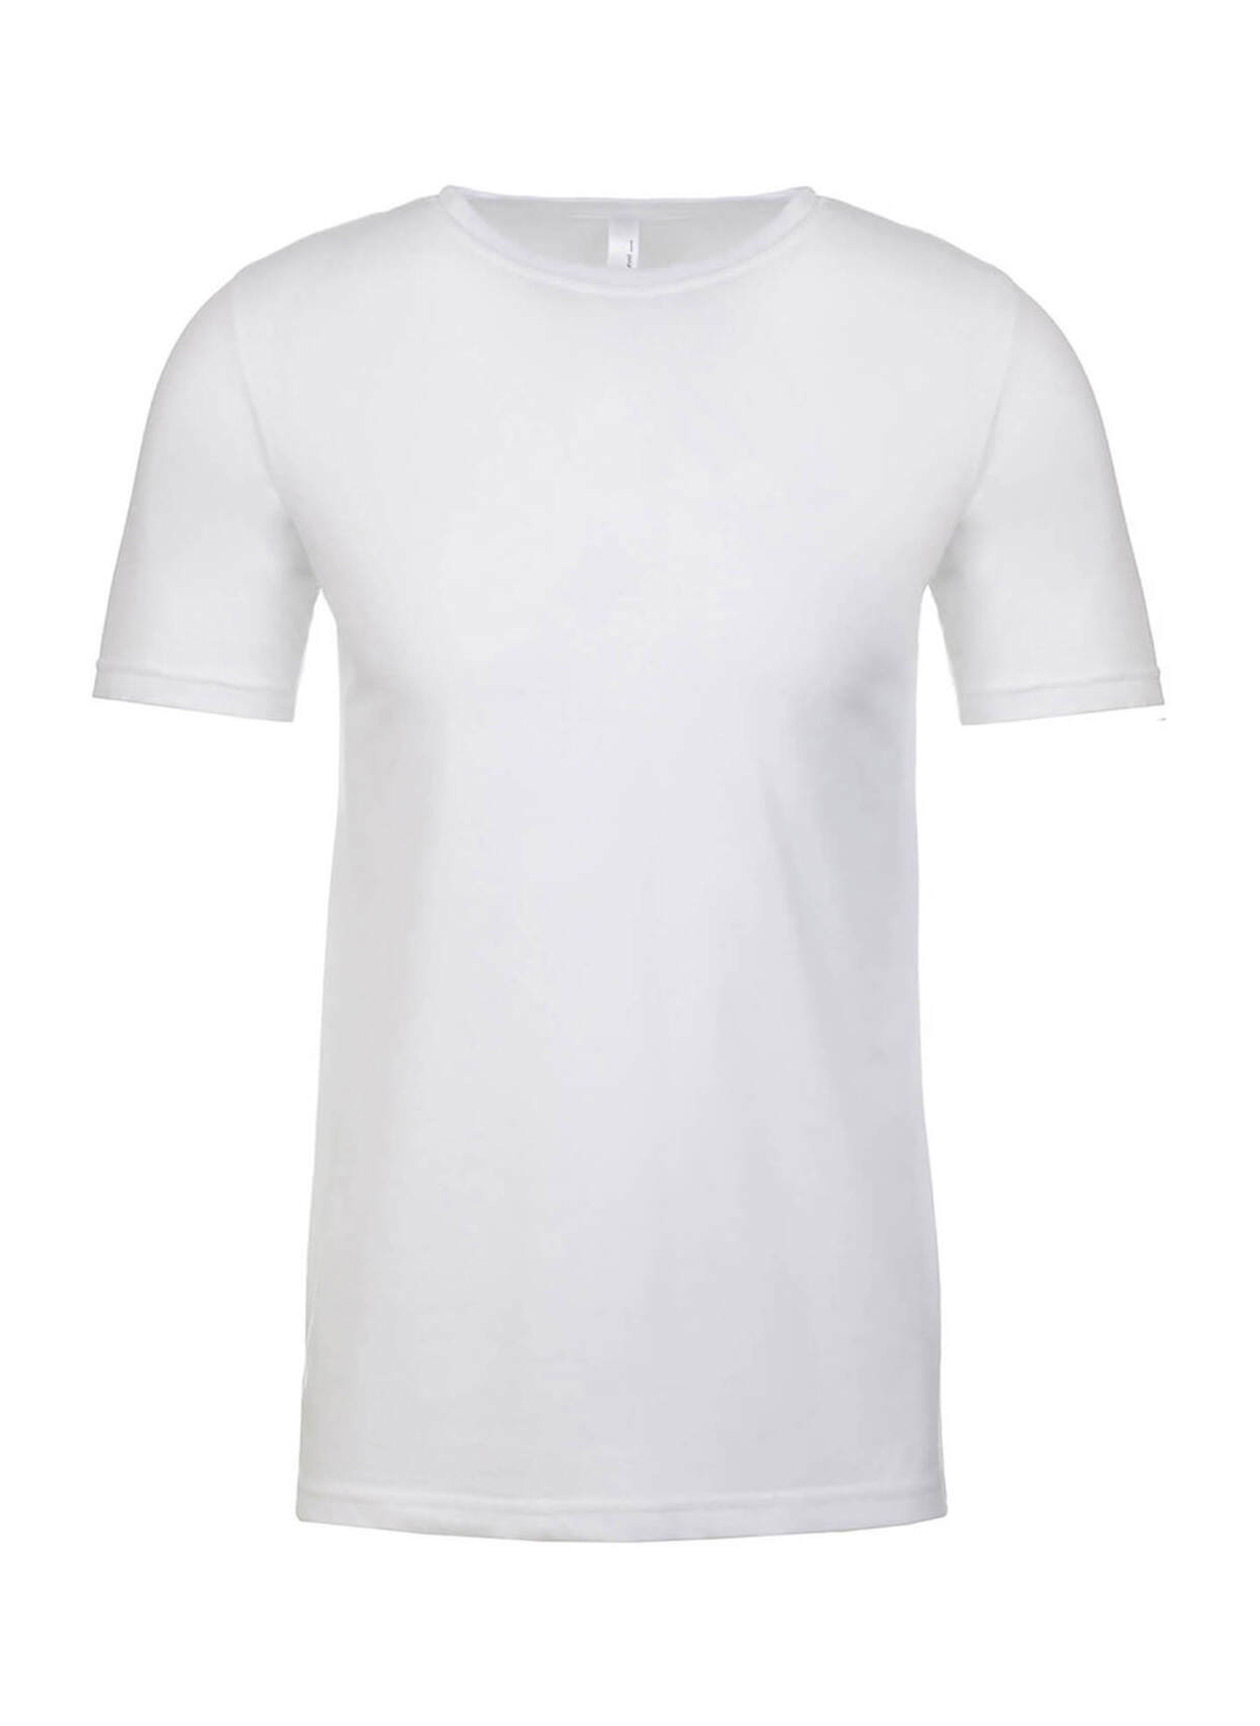 Next Level Men's White Unisex Poly/Cotton Crew T-Shirt